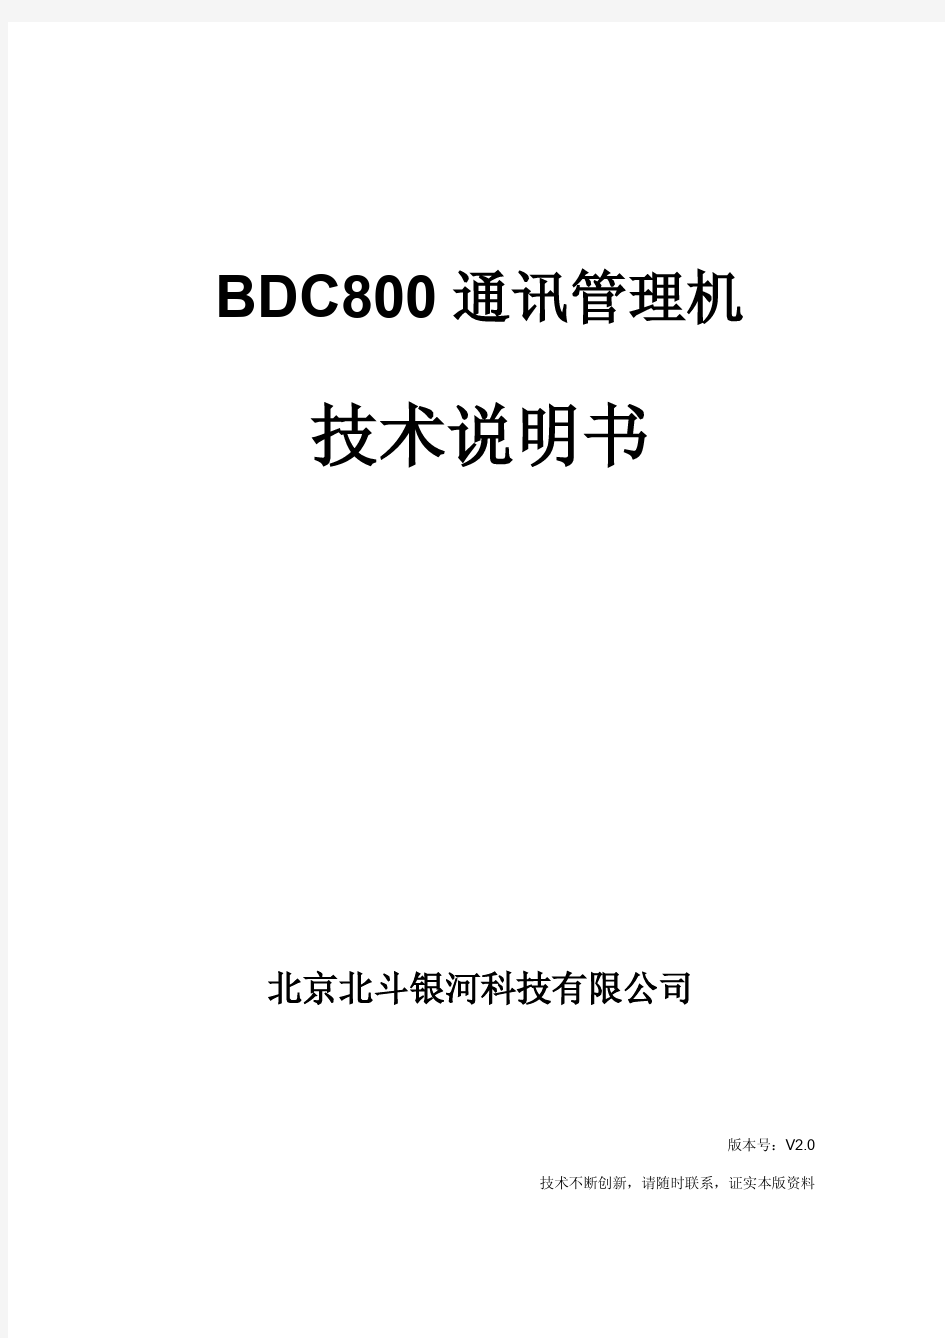 BDC800通讯管理机说明书V2.0